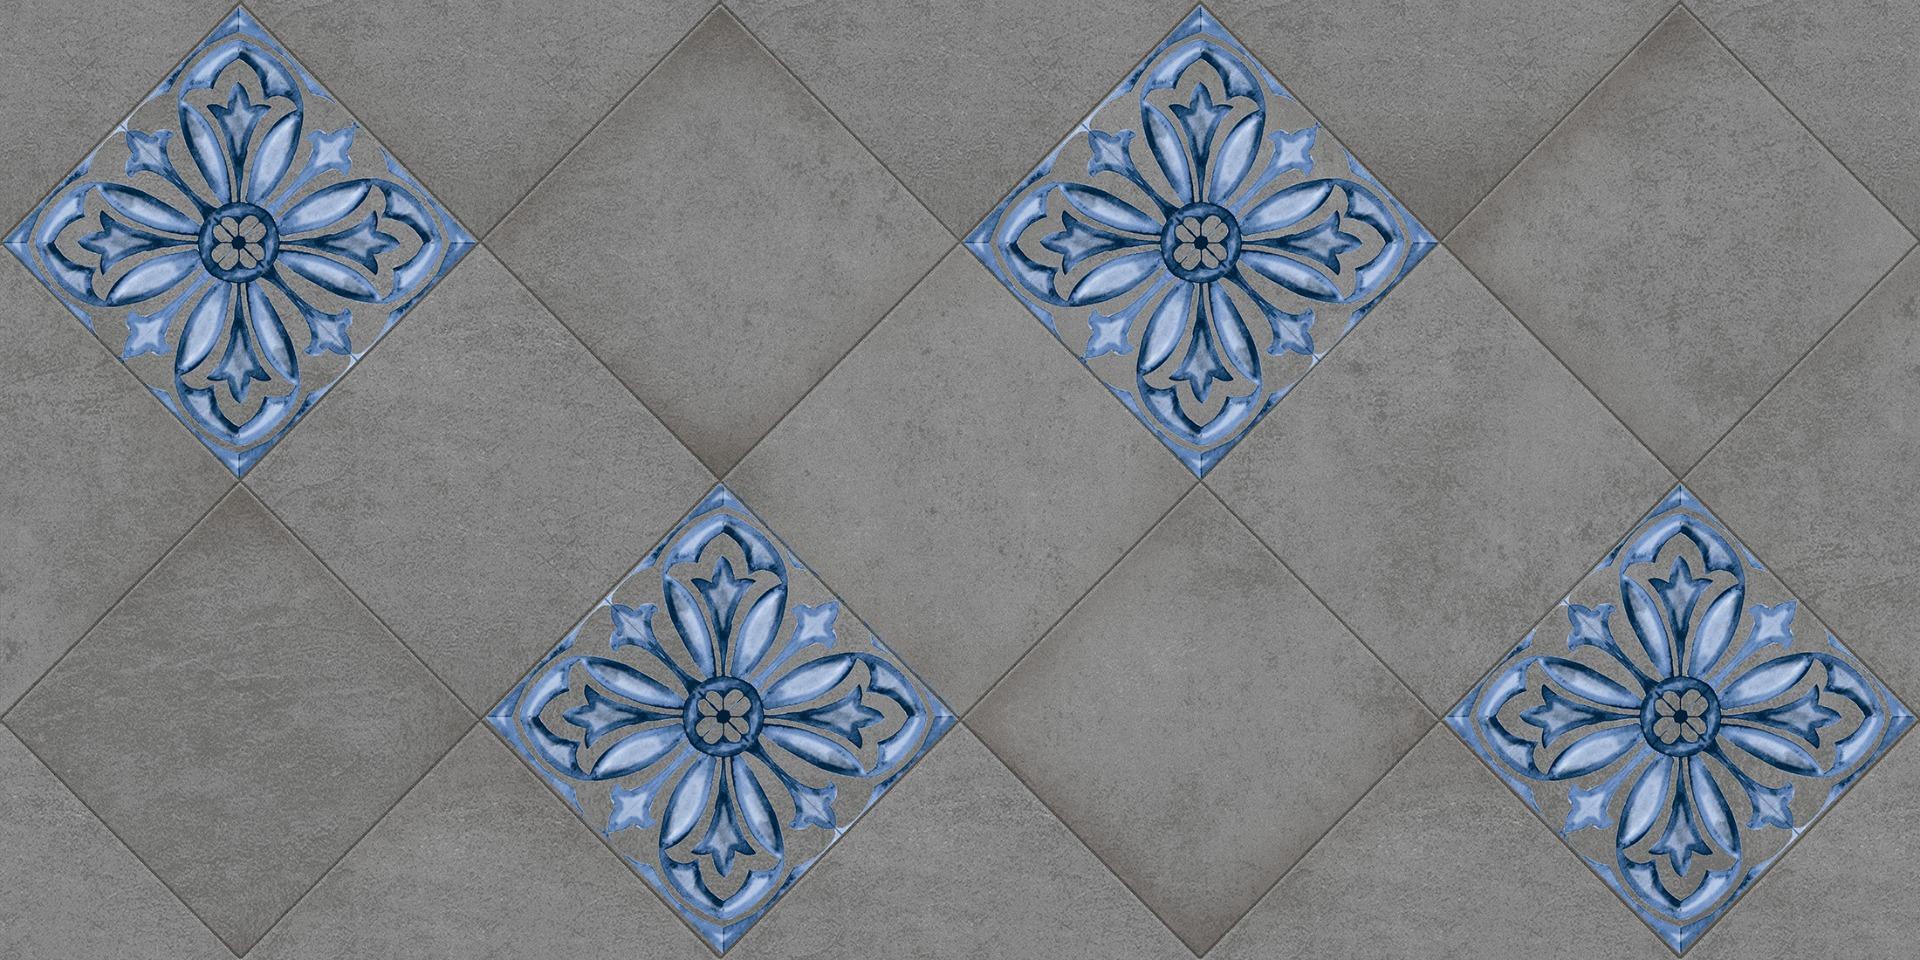 Blue Tiles for Bathroom Tiles, Living Room Tiles, Bedroom Tiles, Accent Tiles, Hospital Tiles, High Traffic Tiles, Bar/Restaurant, Commercial/Office, School & Collages